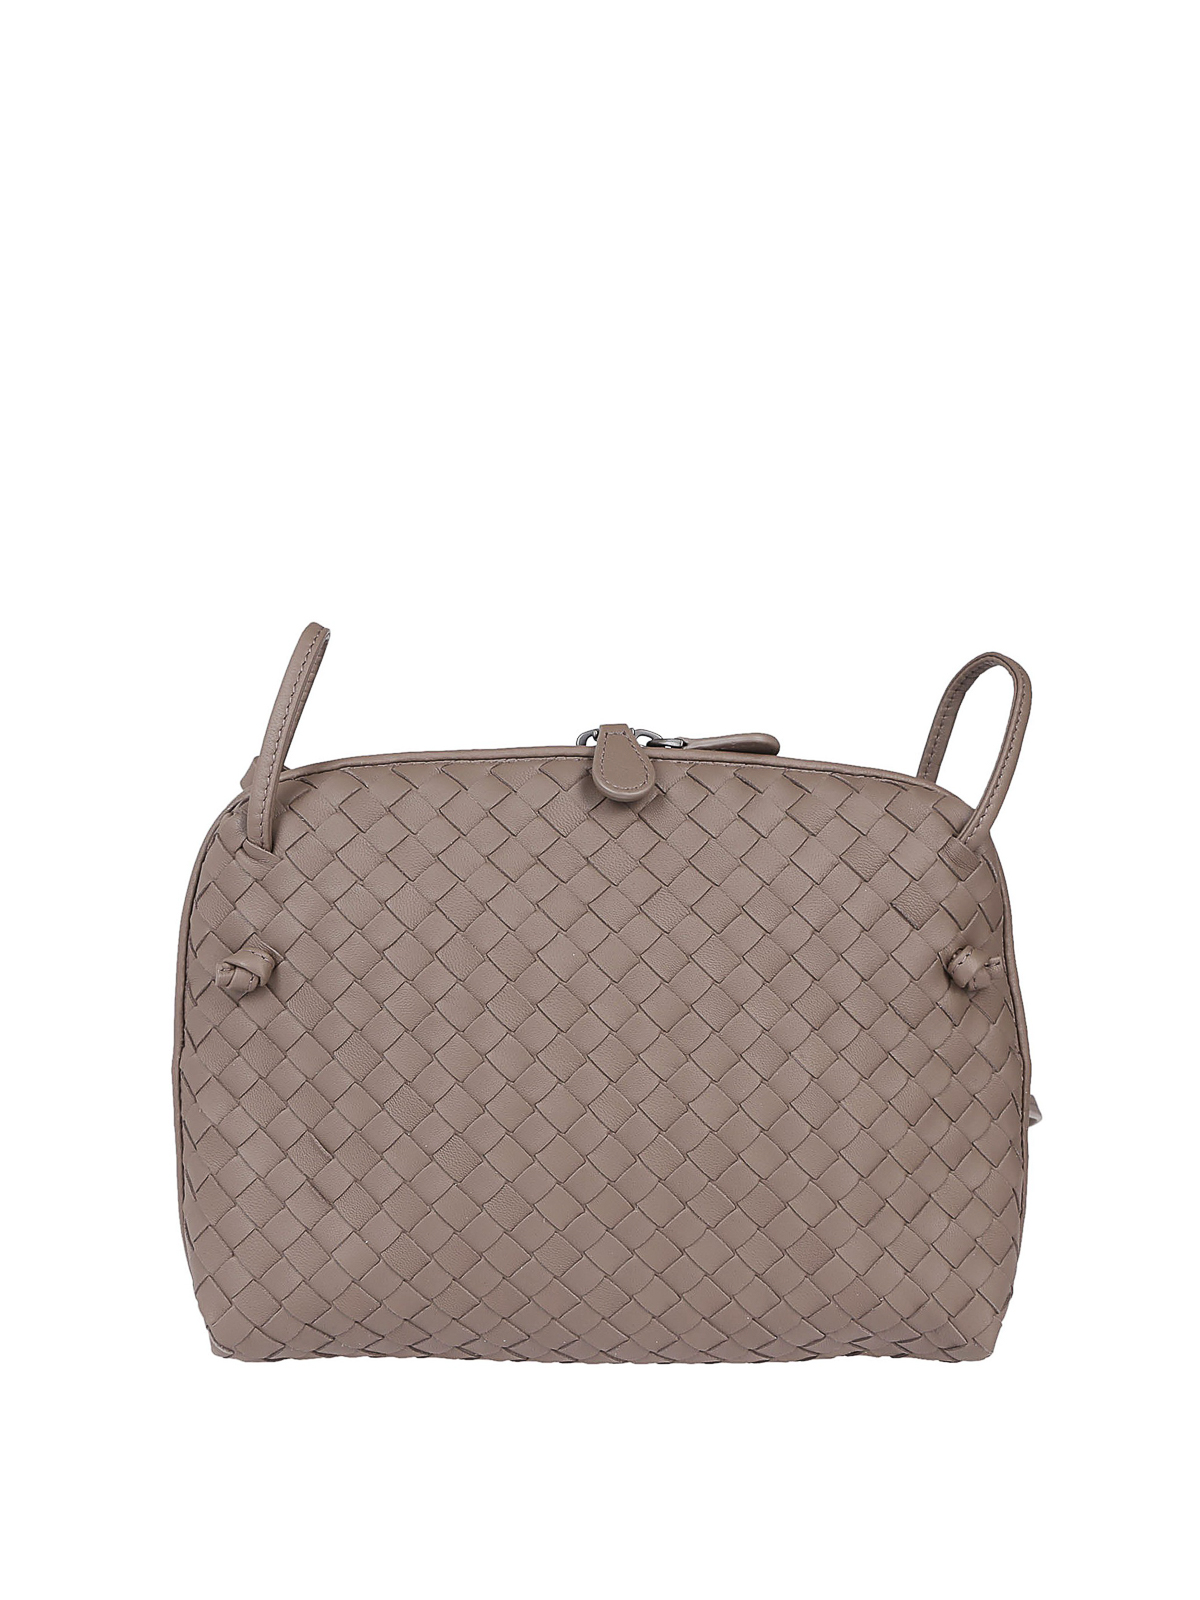 Bottega Veneta Nodini Leather Crossbody Bag in Gray